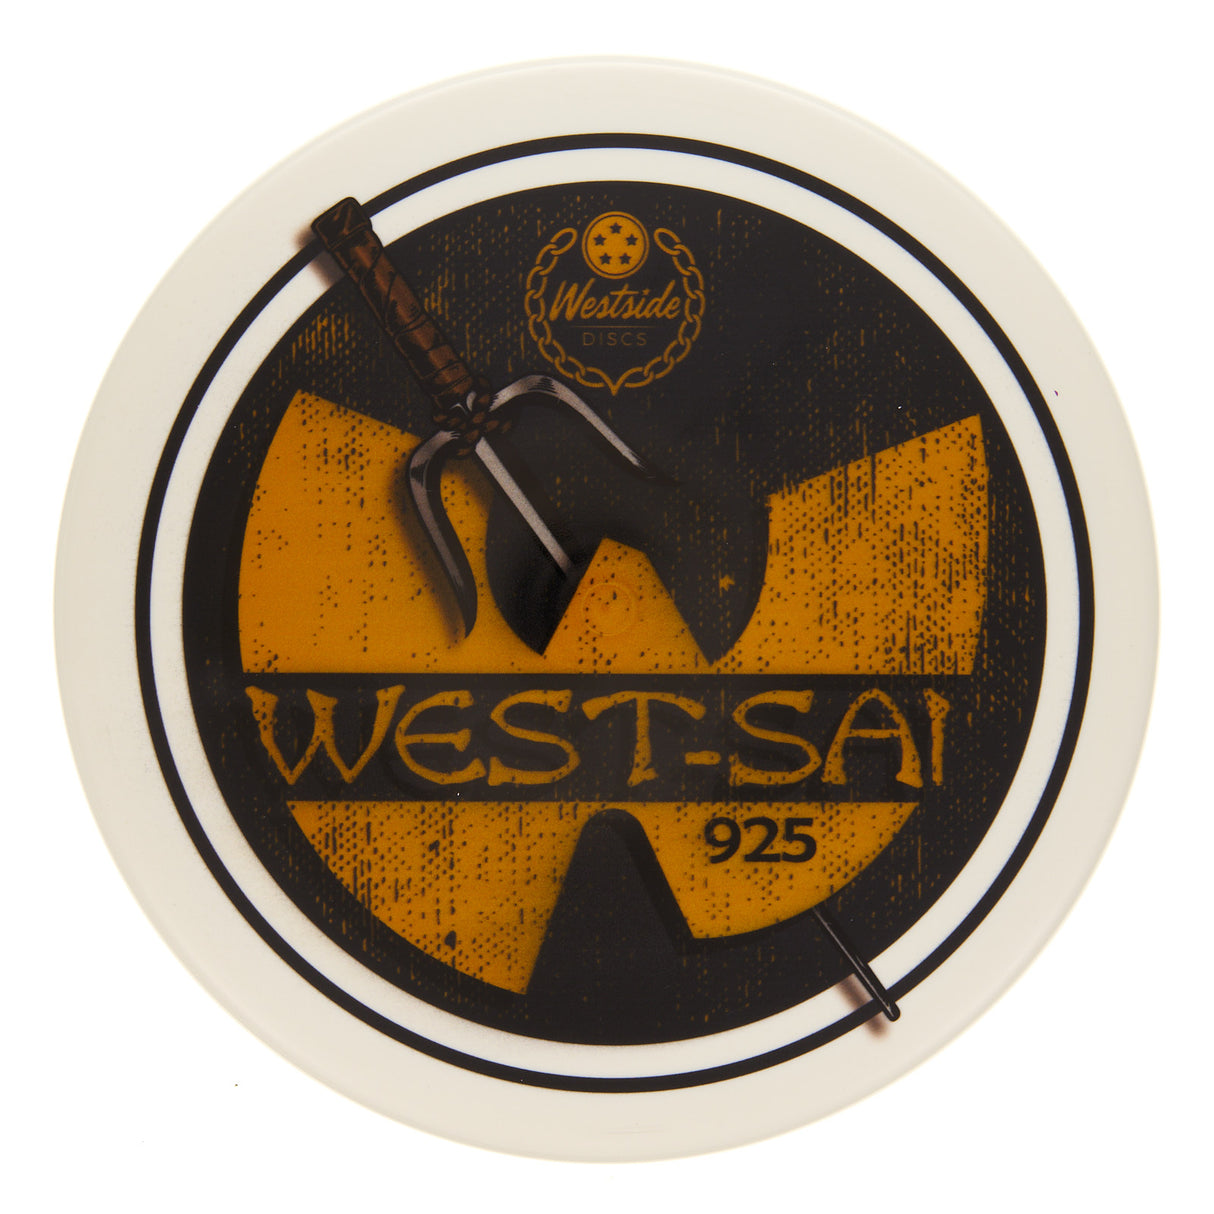 Westside Harp - Sai Ananda West-Sai Tournament DyeMax  177g | Style 0001